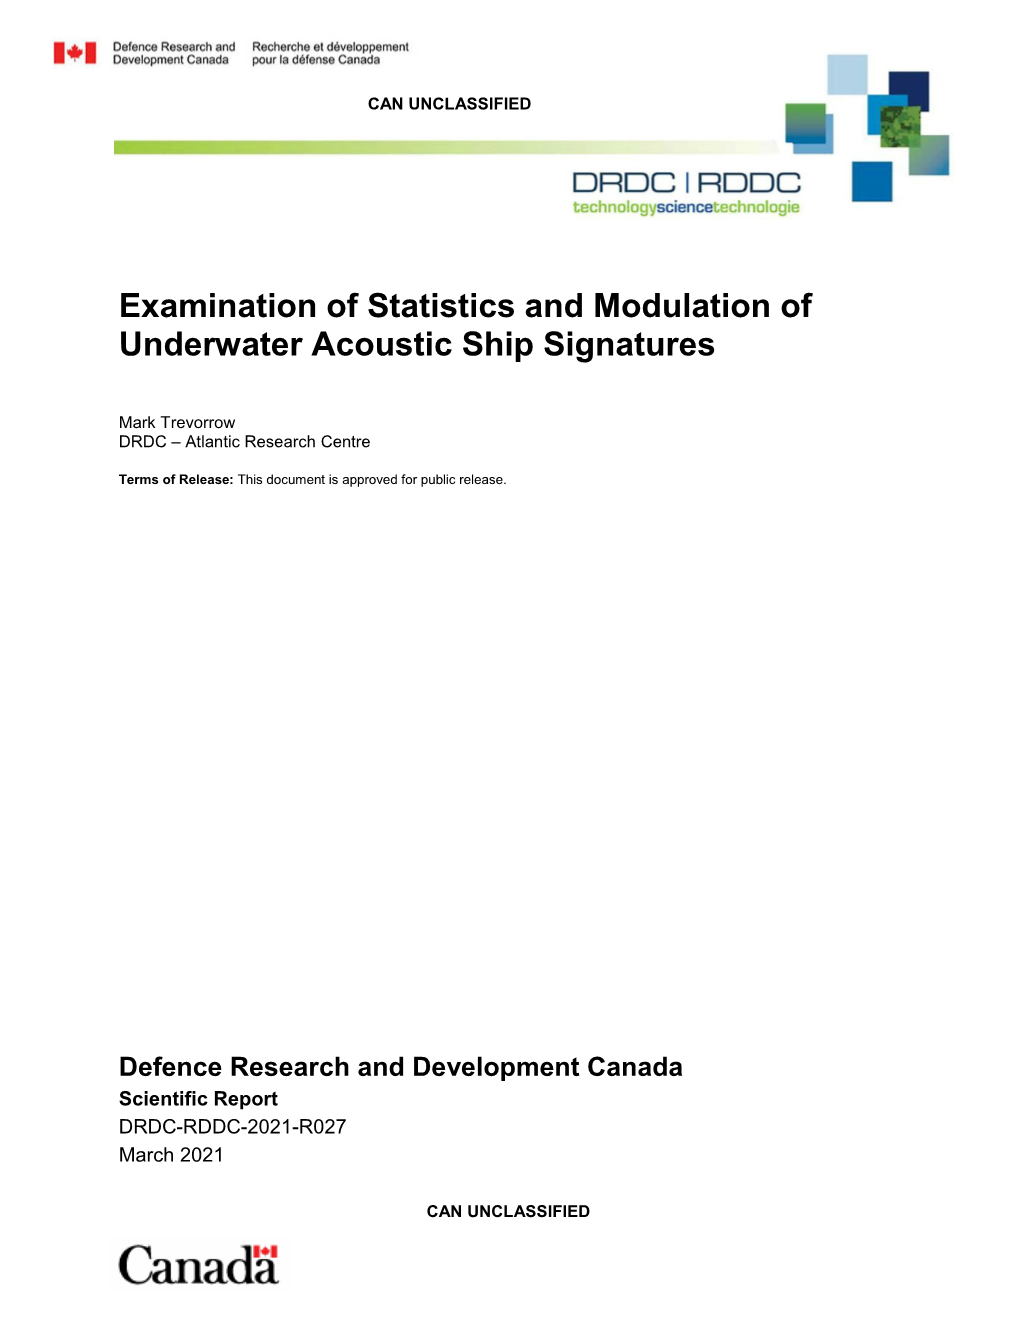 Examination of Statistics and Modulation of Underwater Acoustic Ship Signatures